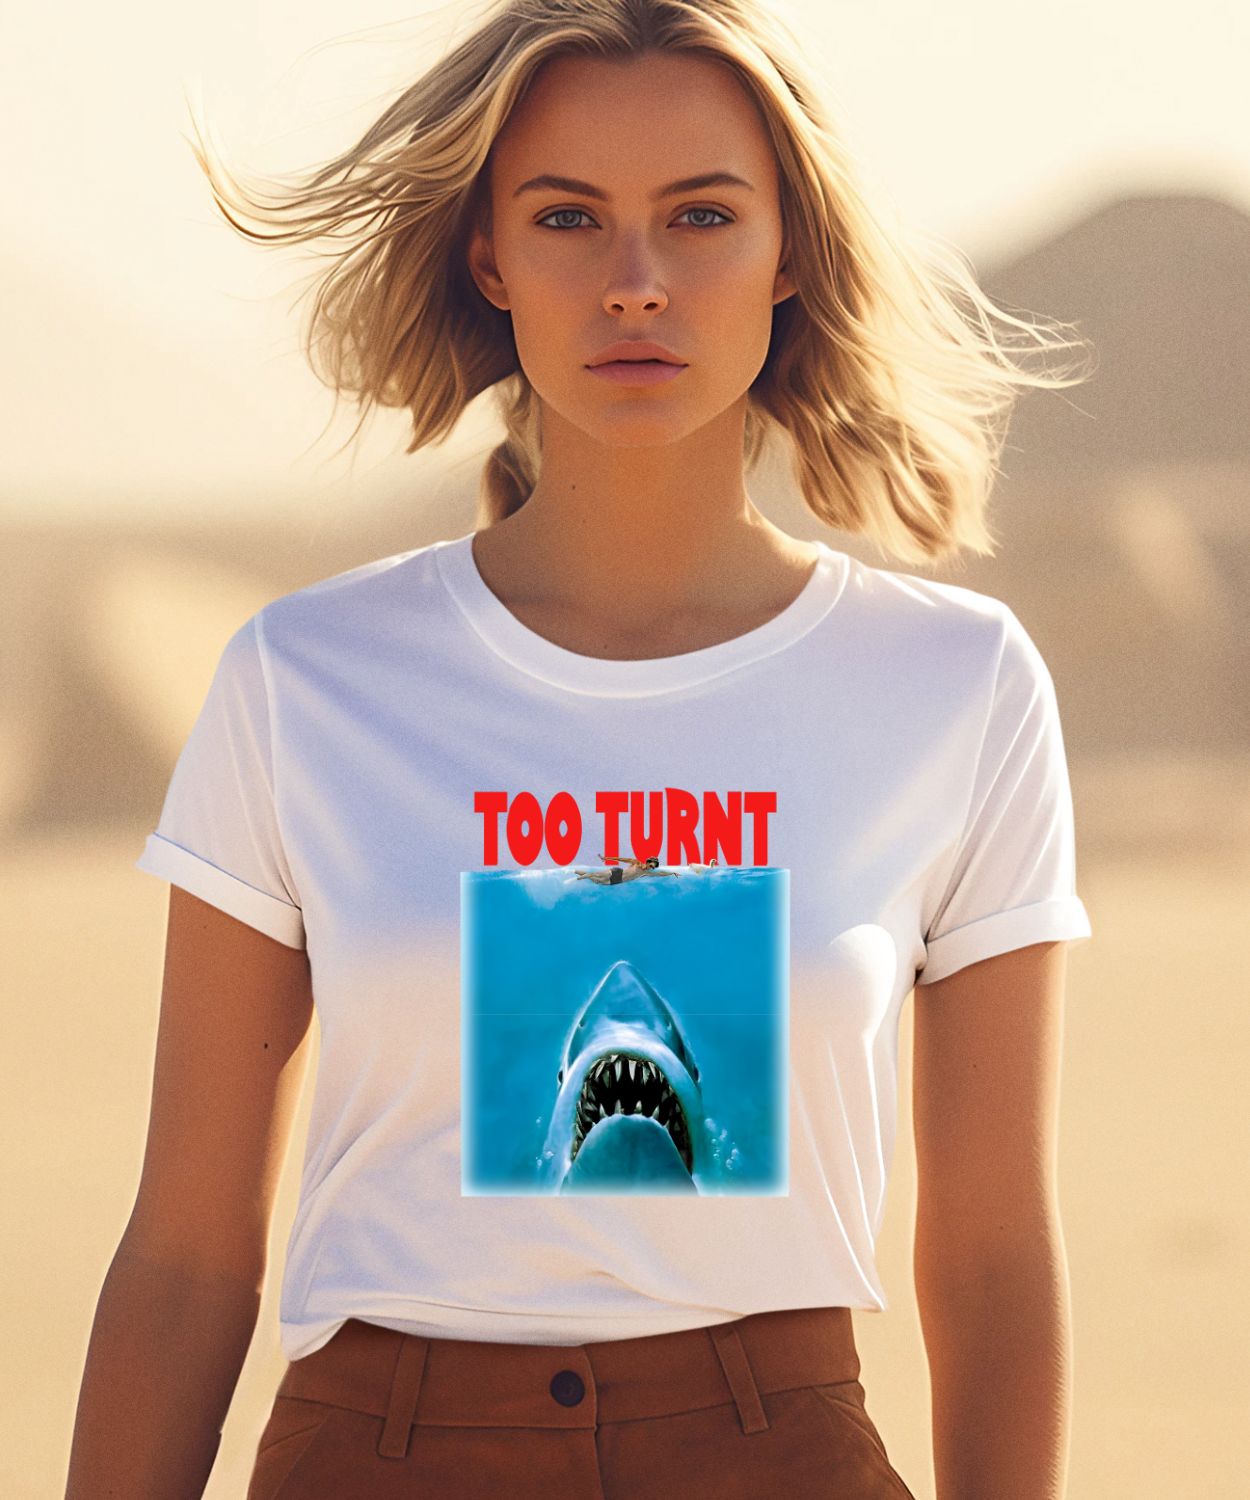 Tooturnttony Merch Shark Week Too Turnt Shirt